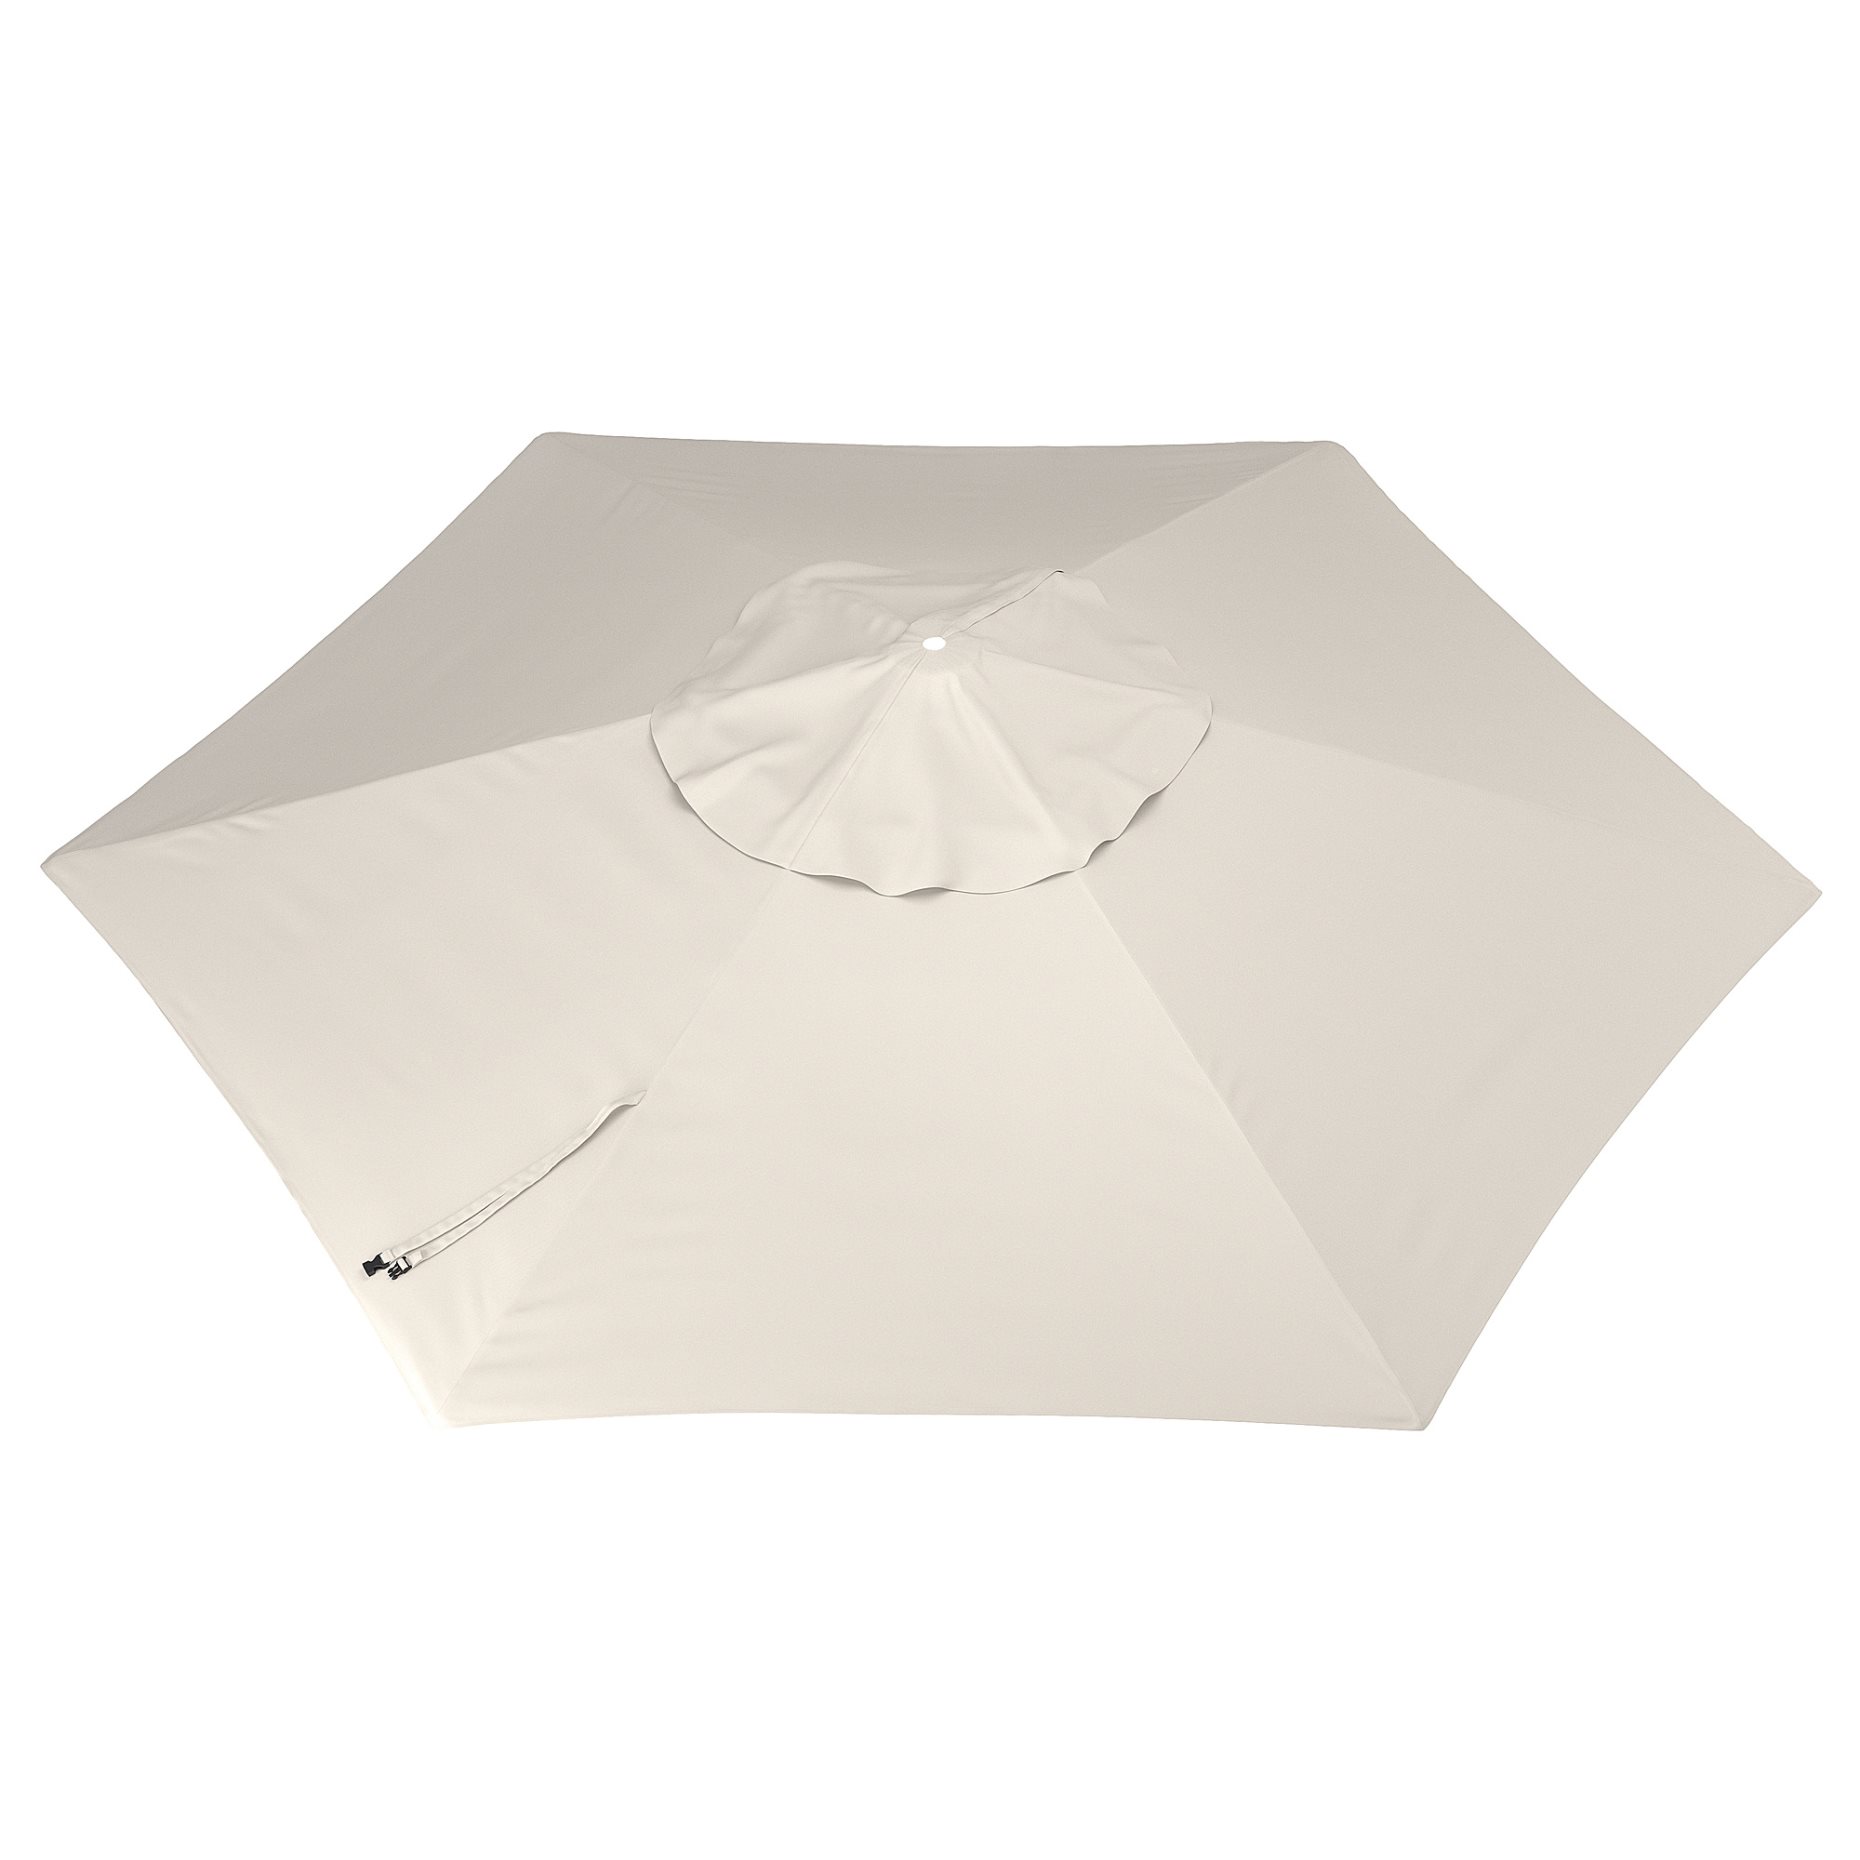 LINDÖJA, ύφασμα ομπρέλας ήλιου, 300 cm, 105.320.22